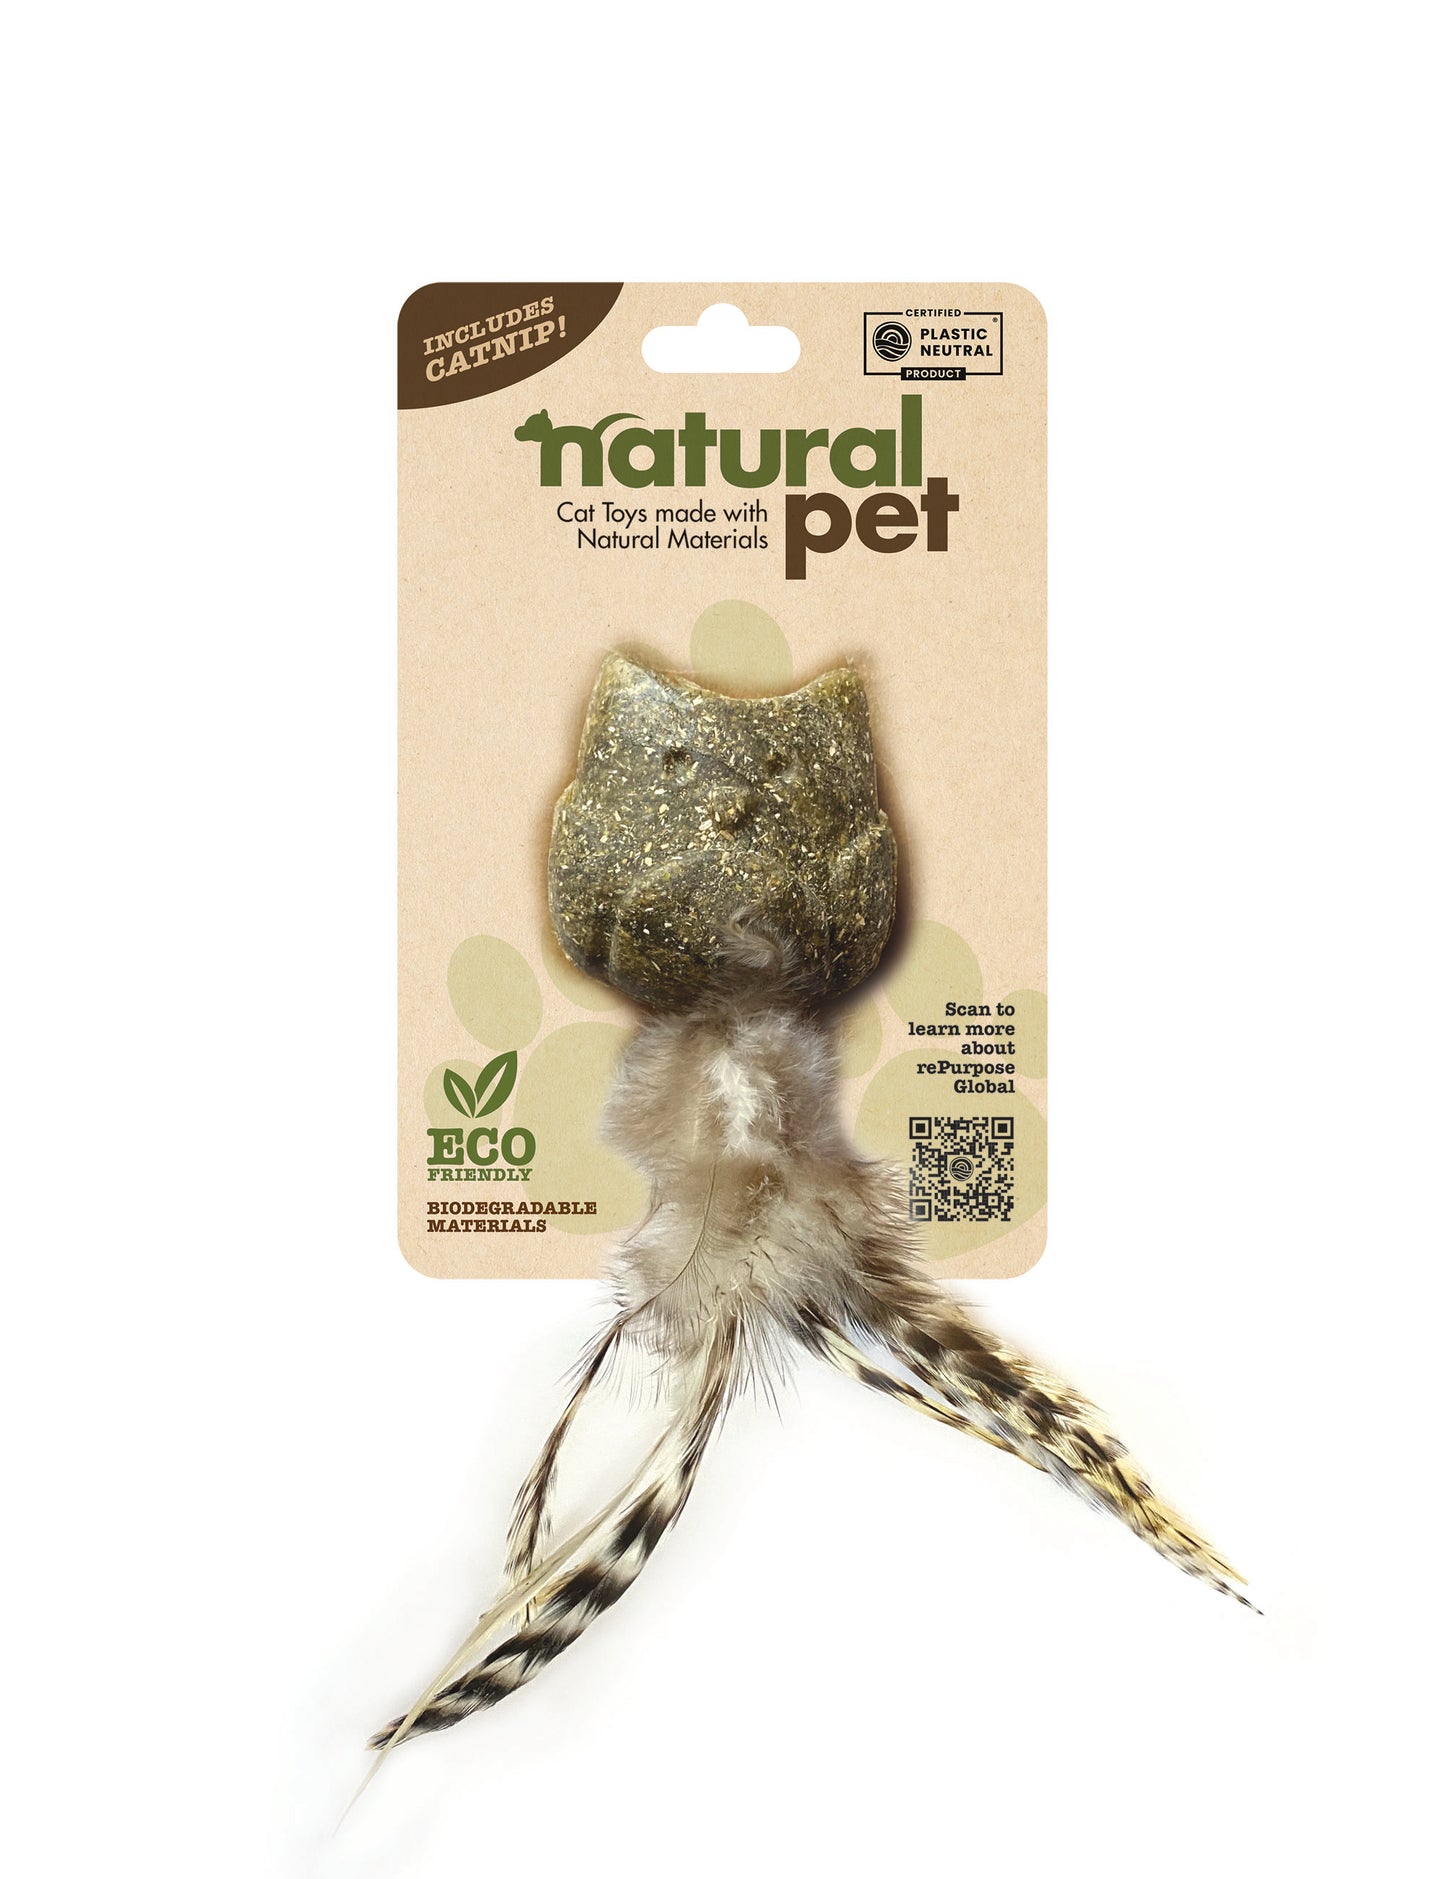 Natural Pet- Pressed Owl Catnip Toy